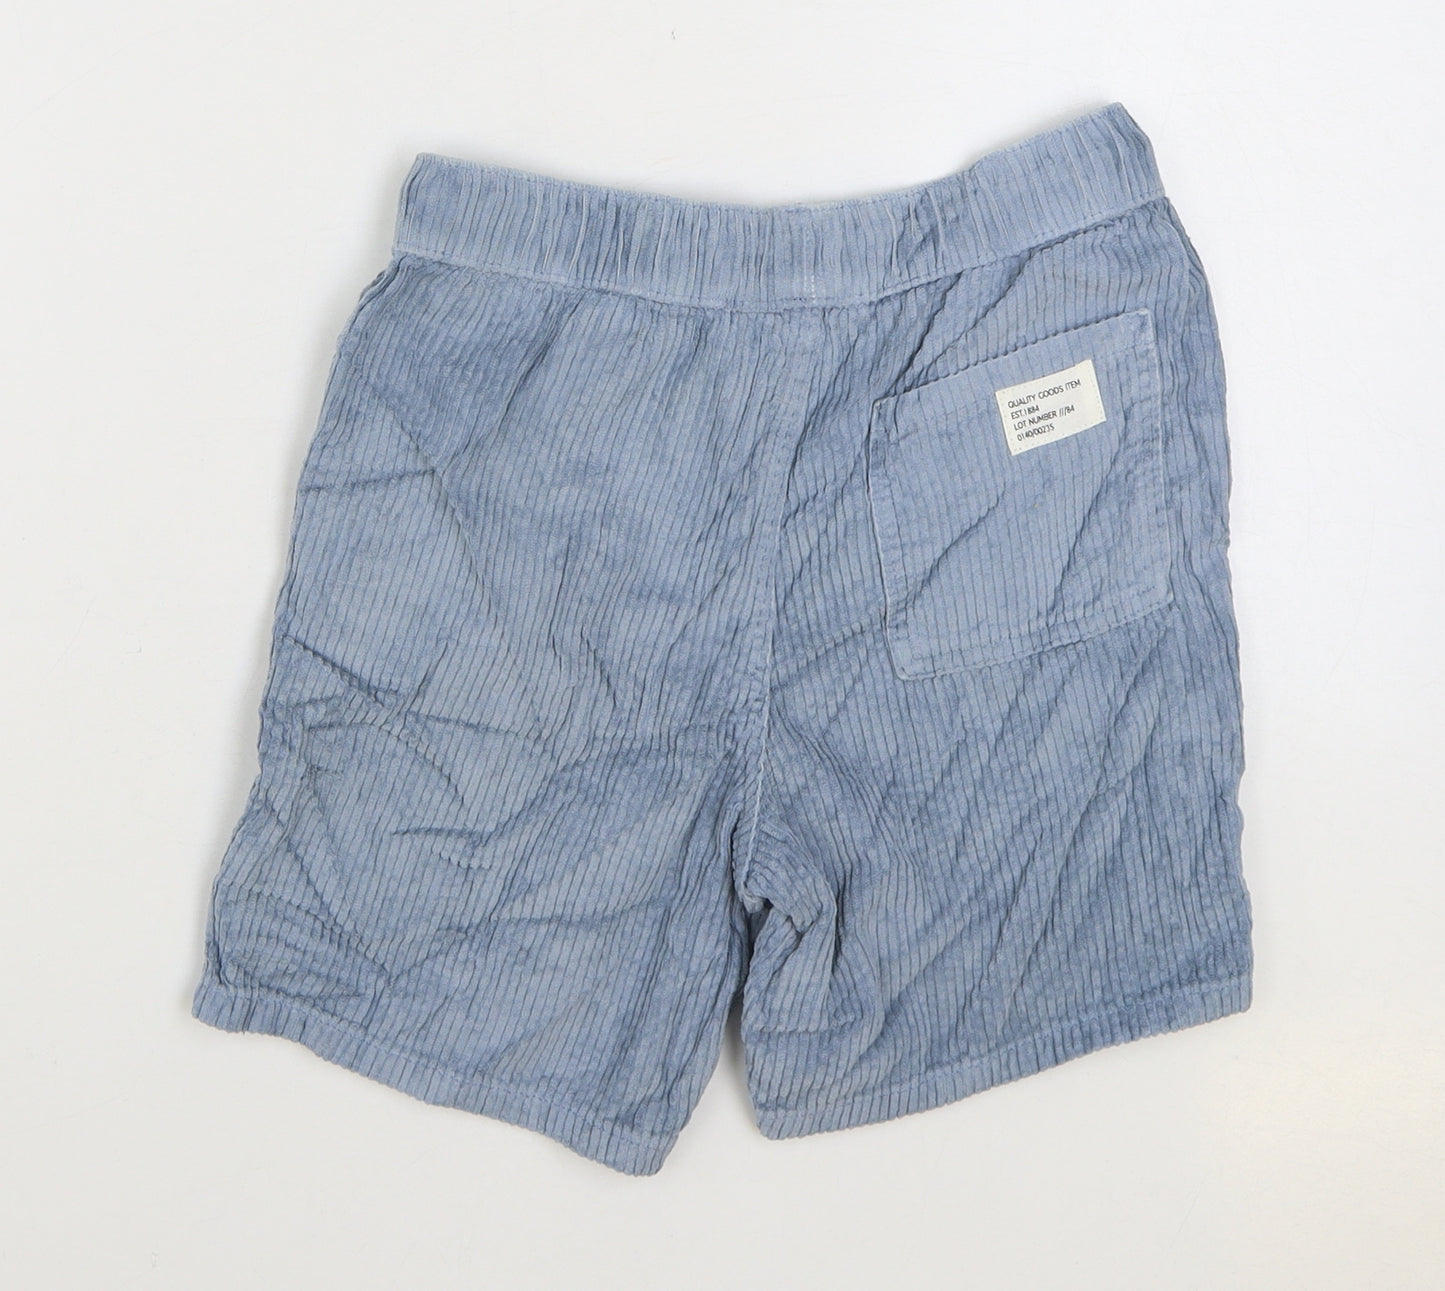 Marks and Spencer Boys Blue Cotton Bermuda Shorts Size 9-10 Years Regular Drawstring